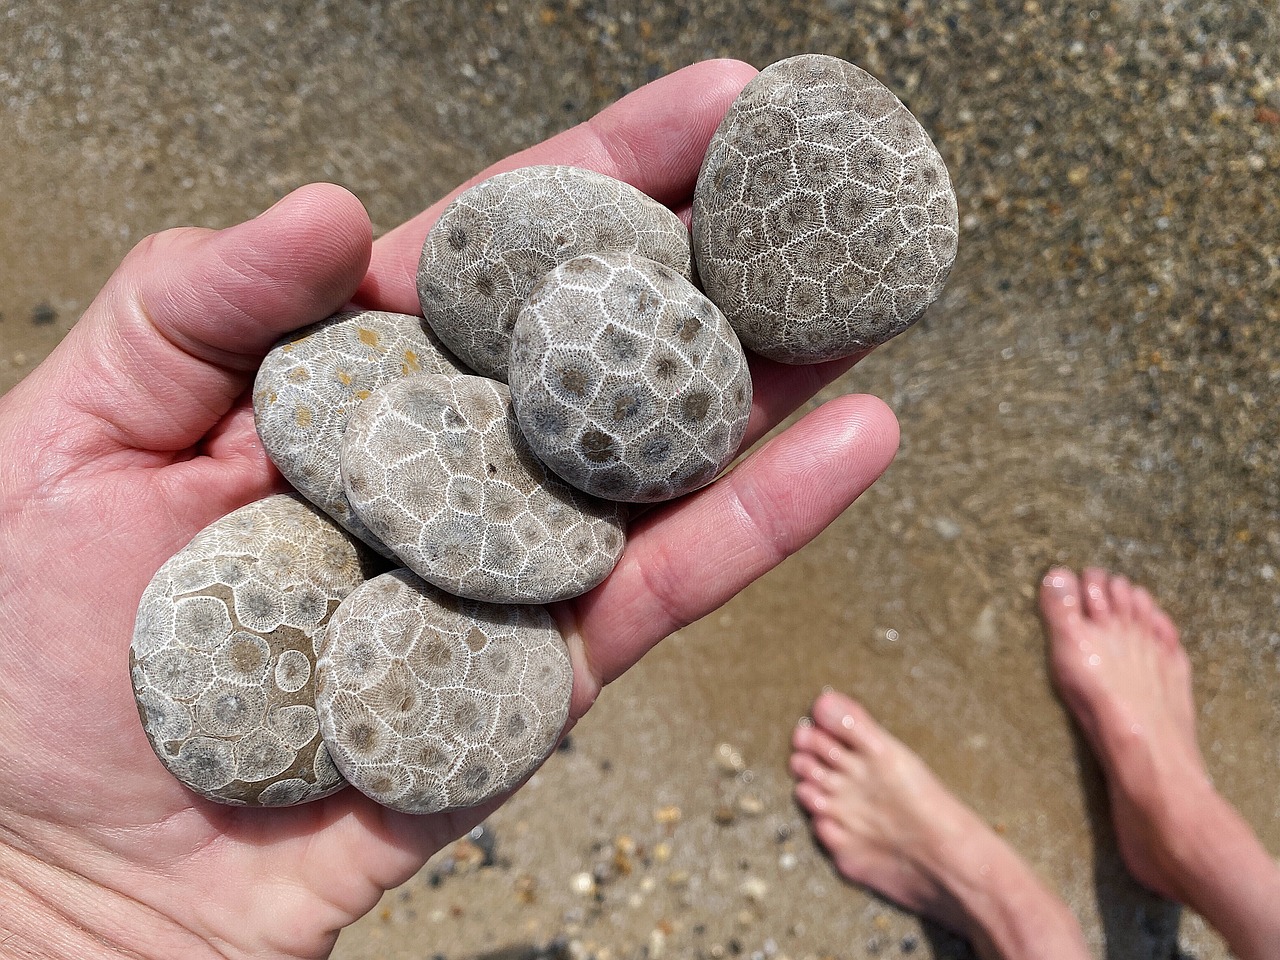 best rock hunting beaches in Michigan - petoskey stone